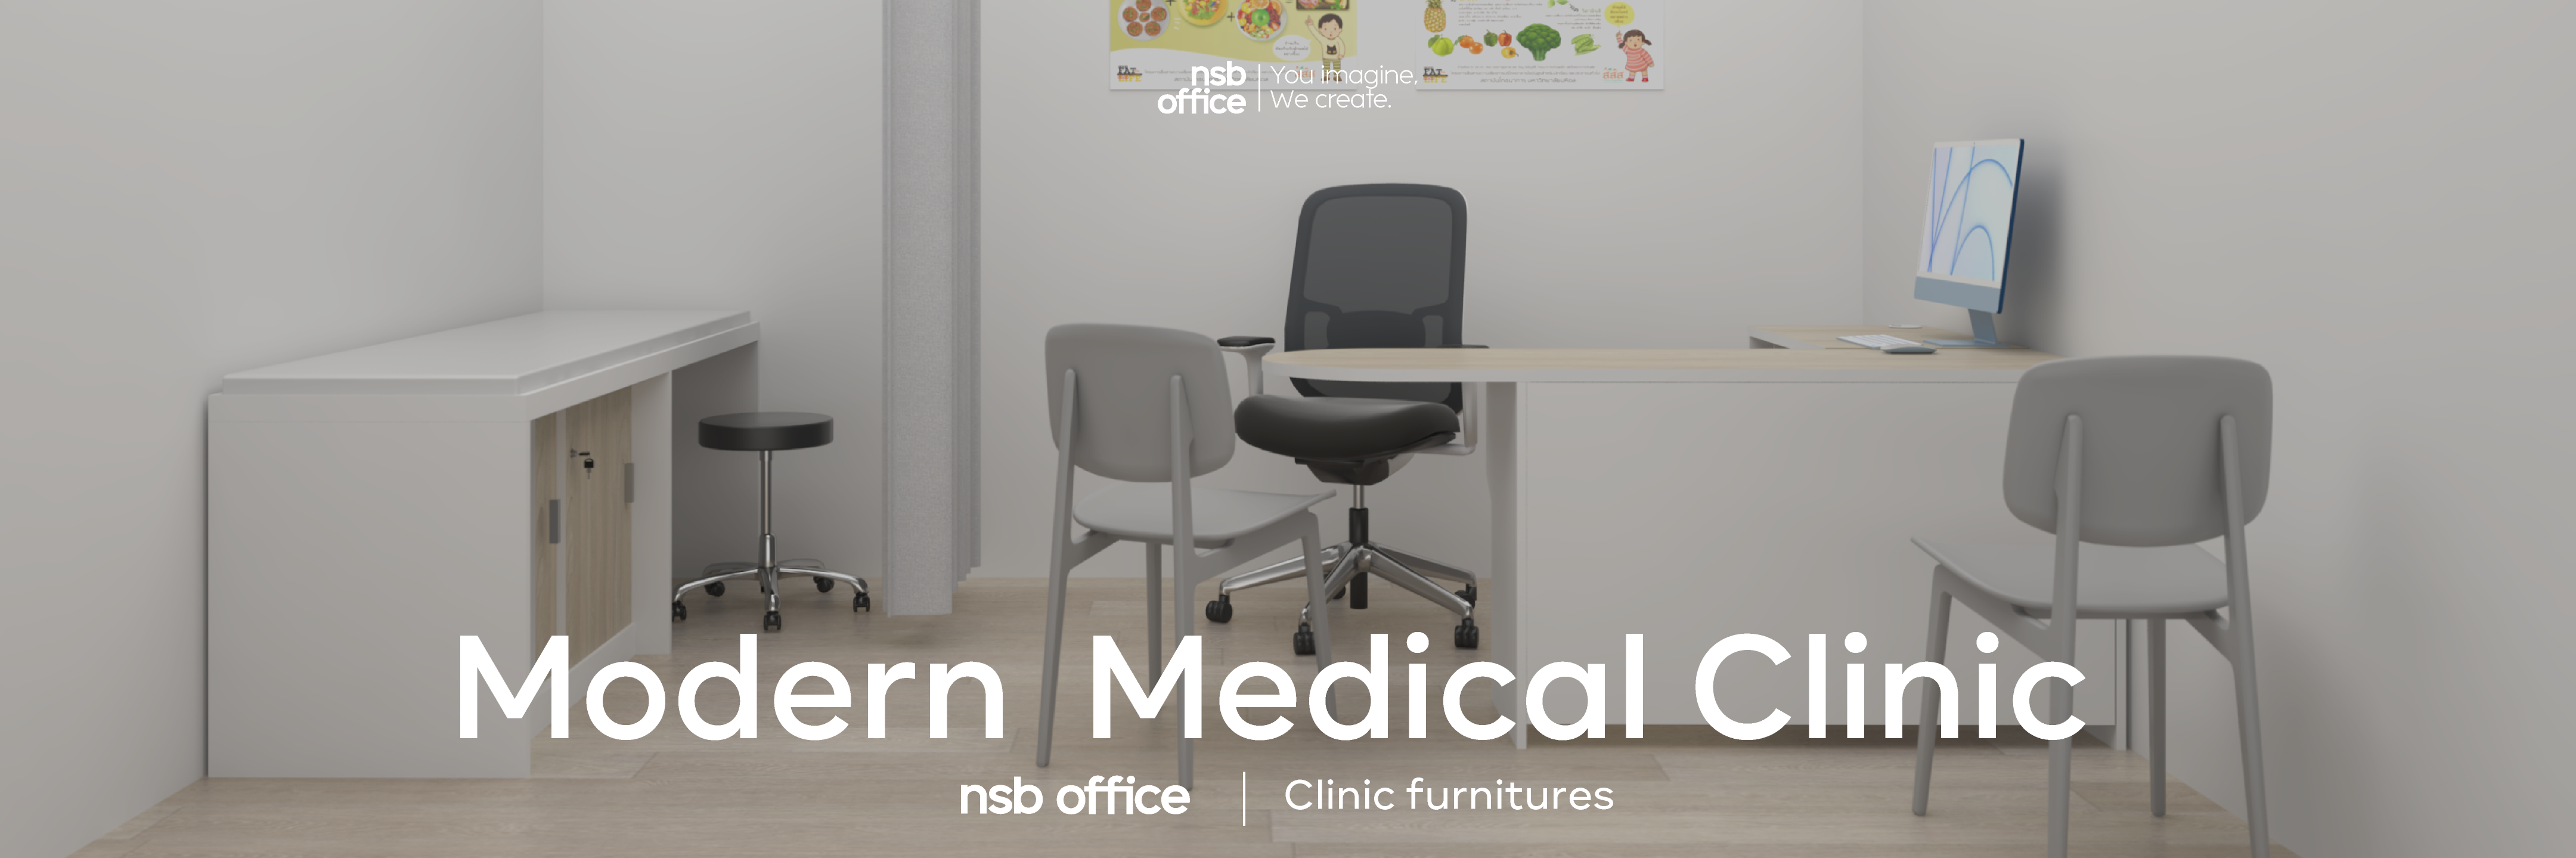 Room: Modern Medical Clinic | แนะนำการเลือกเฟอร์นิเจอร์ในคลินิกเวชกรรม   